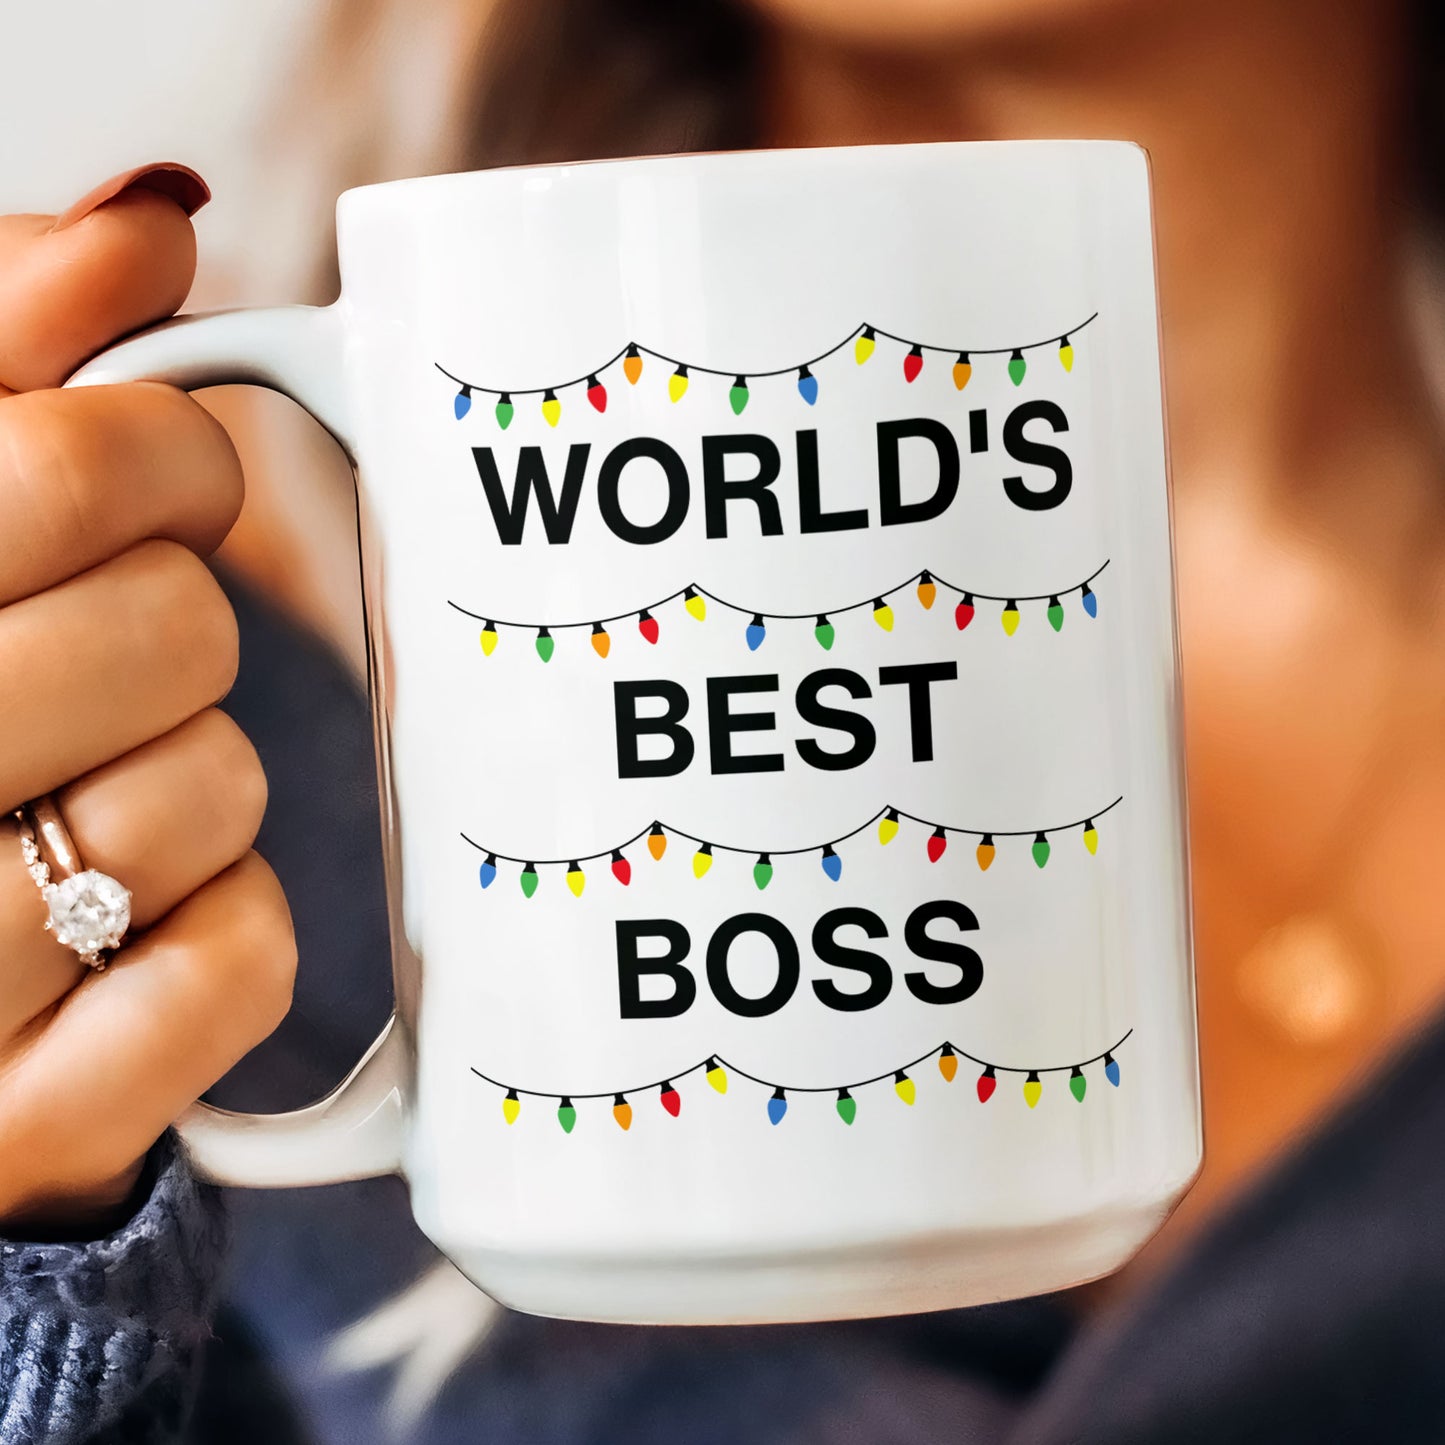 World'S Best Boss Funny Xmas Lights Custom Face - Personalized Photo Mug